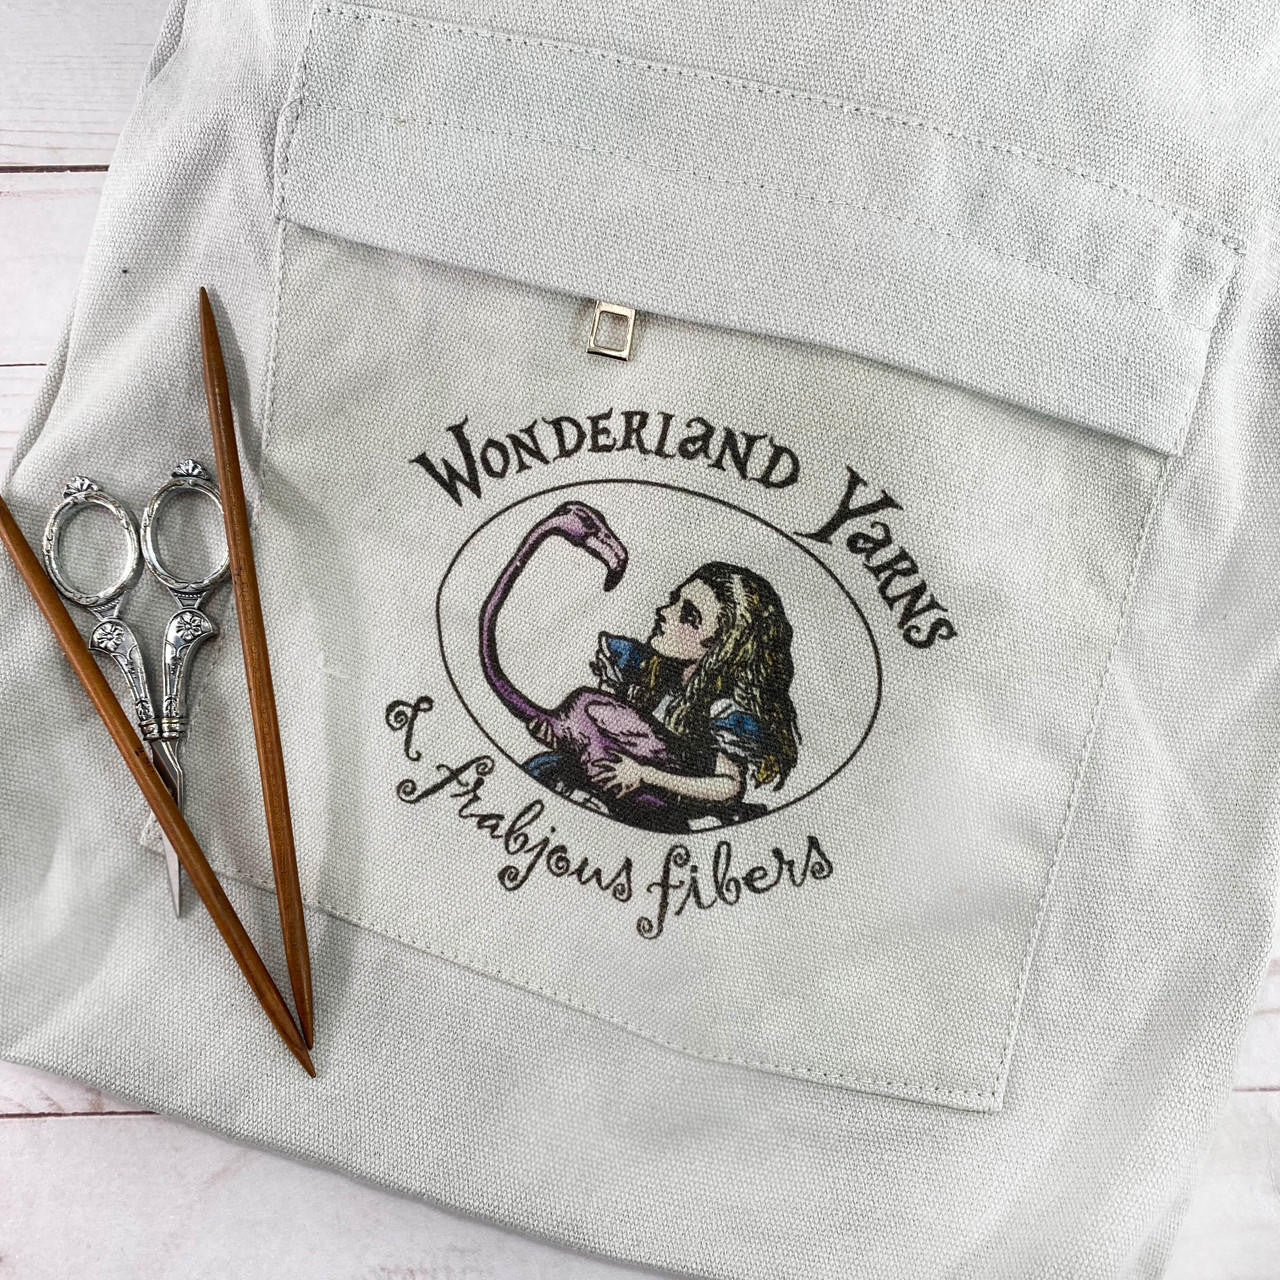 Wonderland Yarns Canvas Project Bags